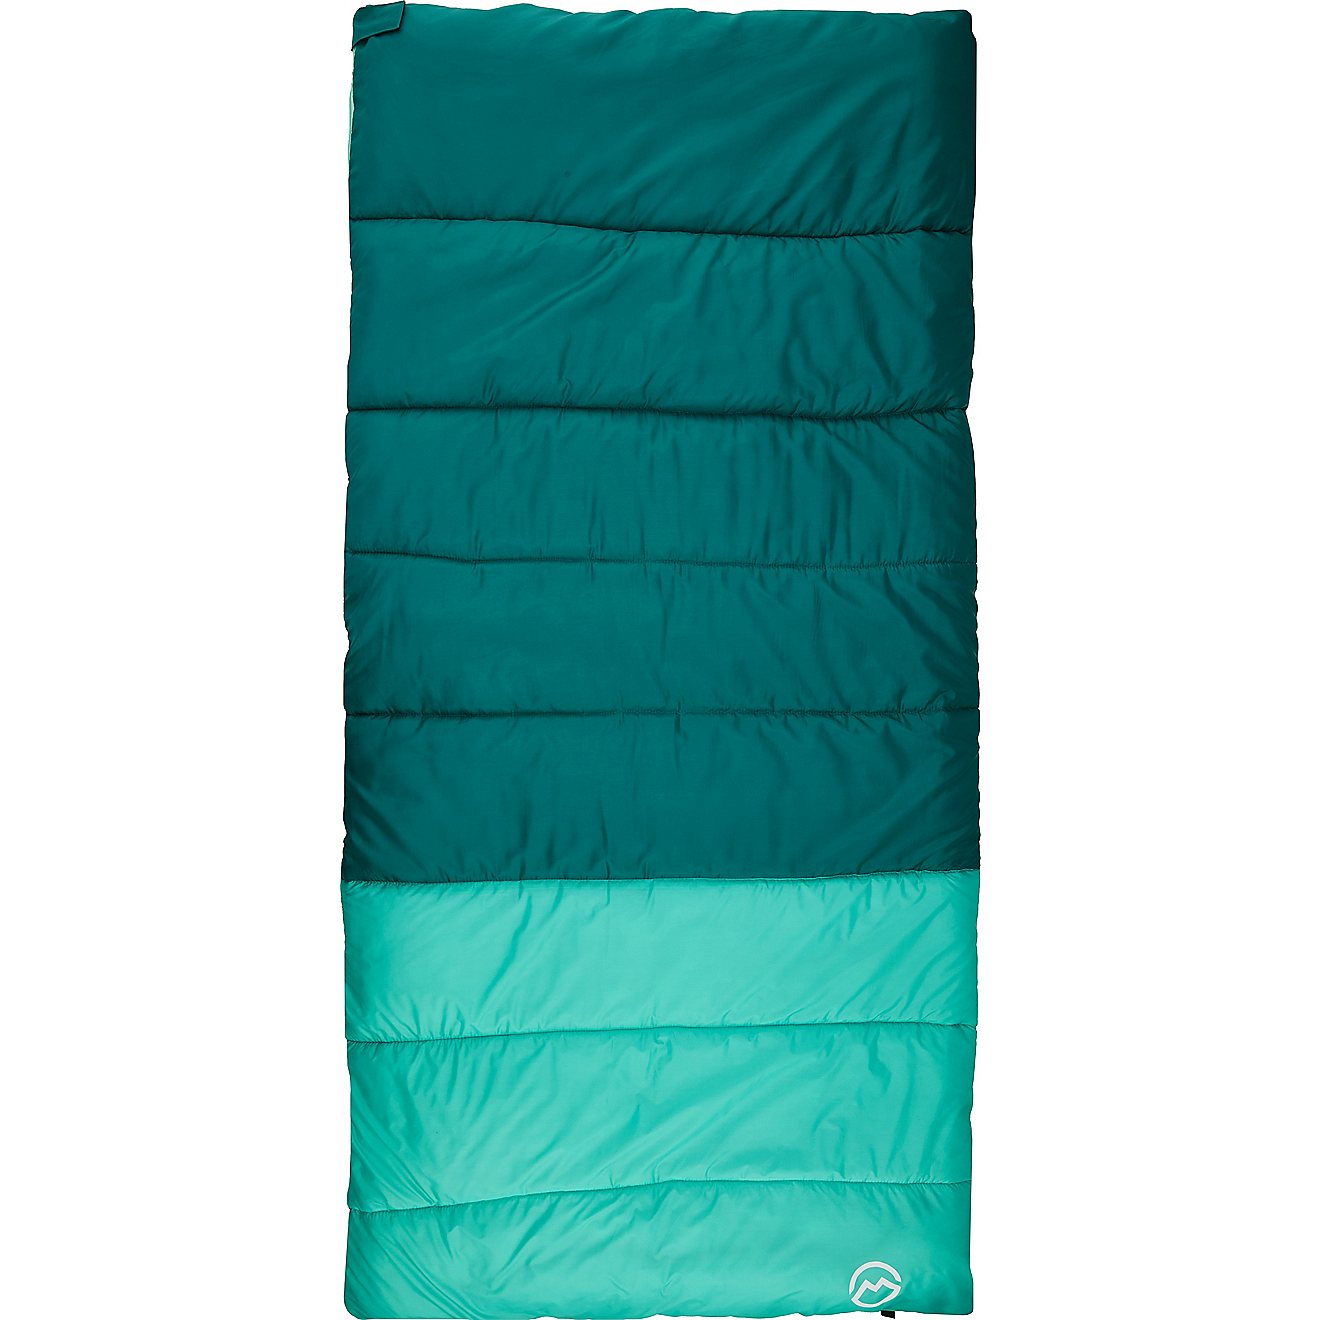 Magellan Outdoors 30 degrees F Color Block Sleeping Bag | Academy